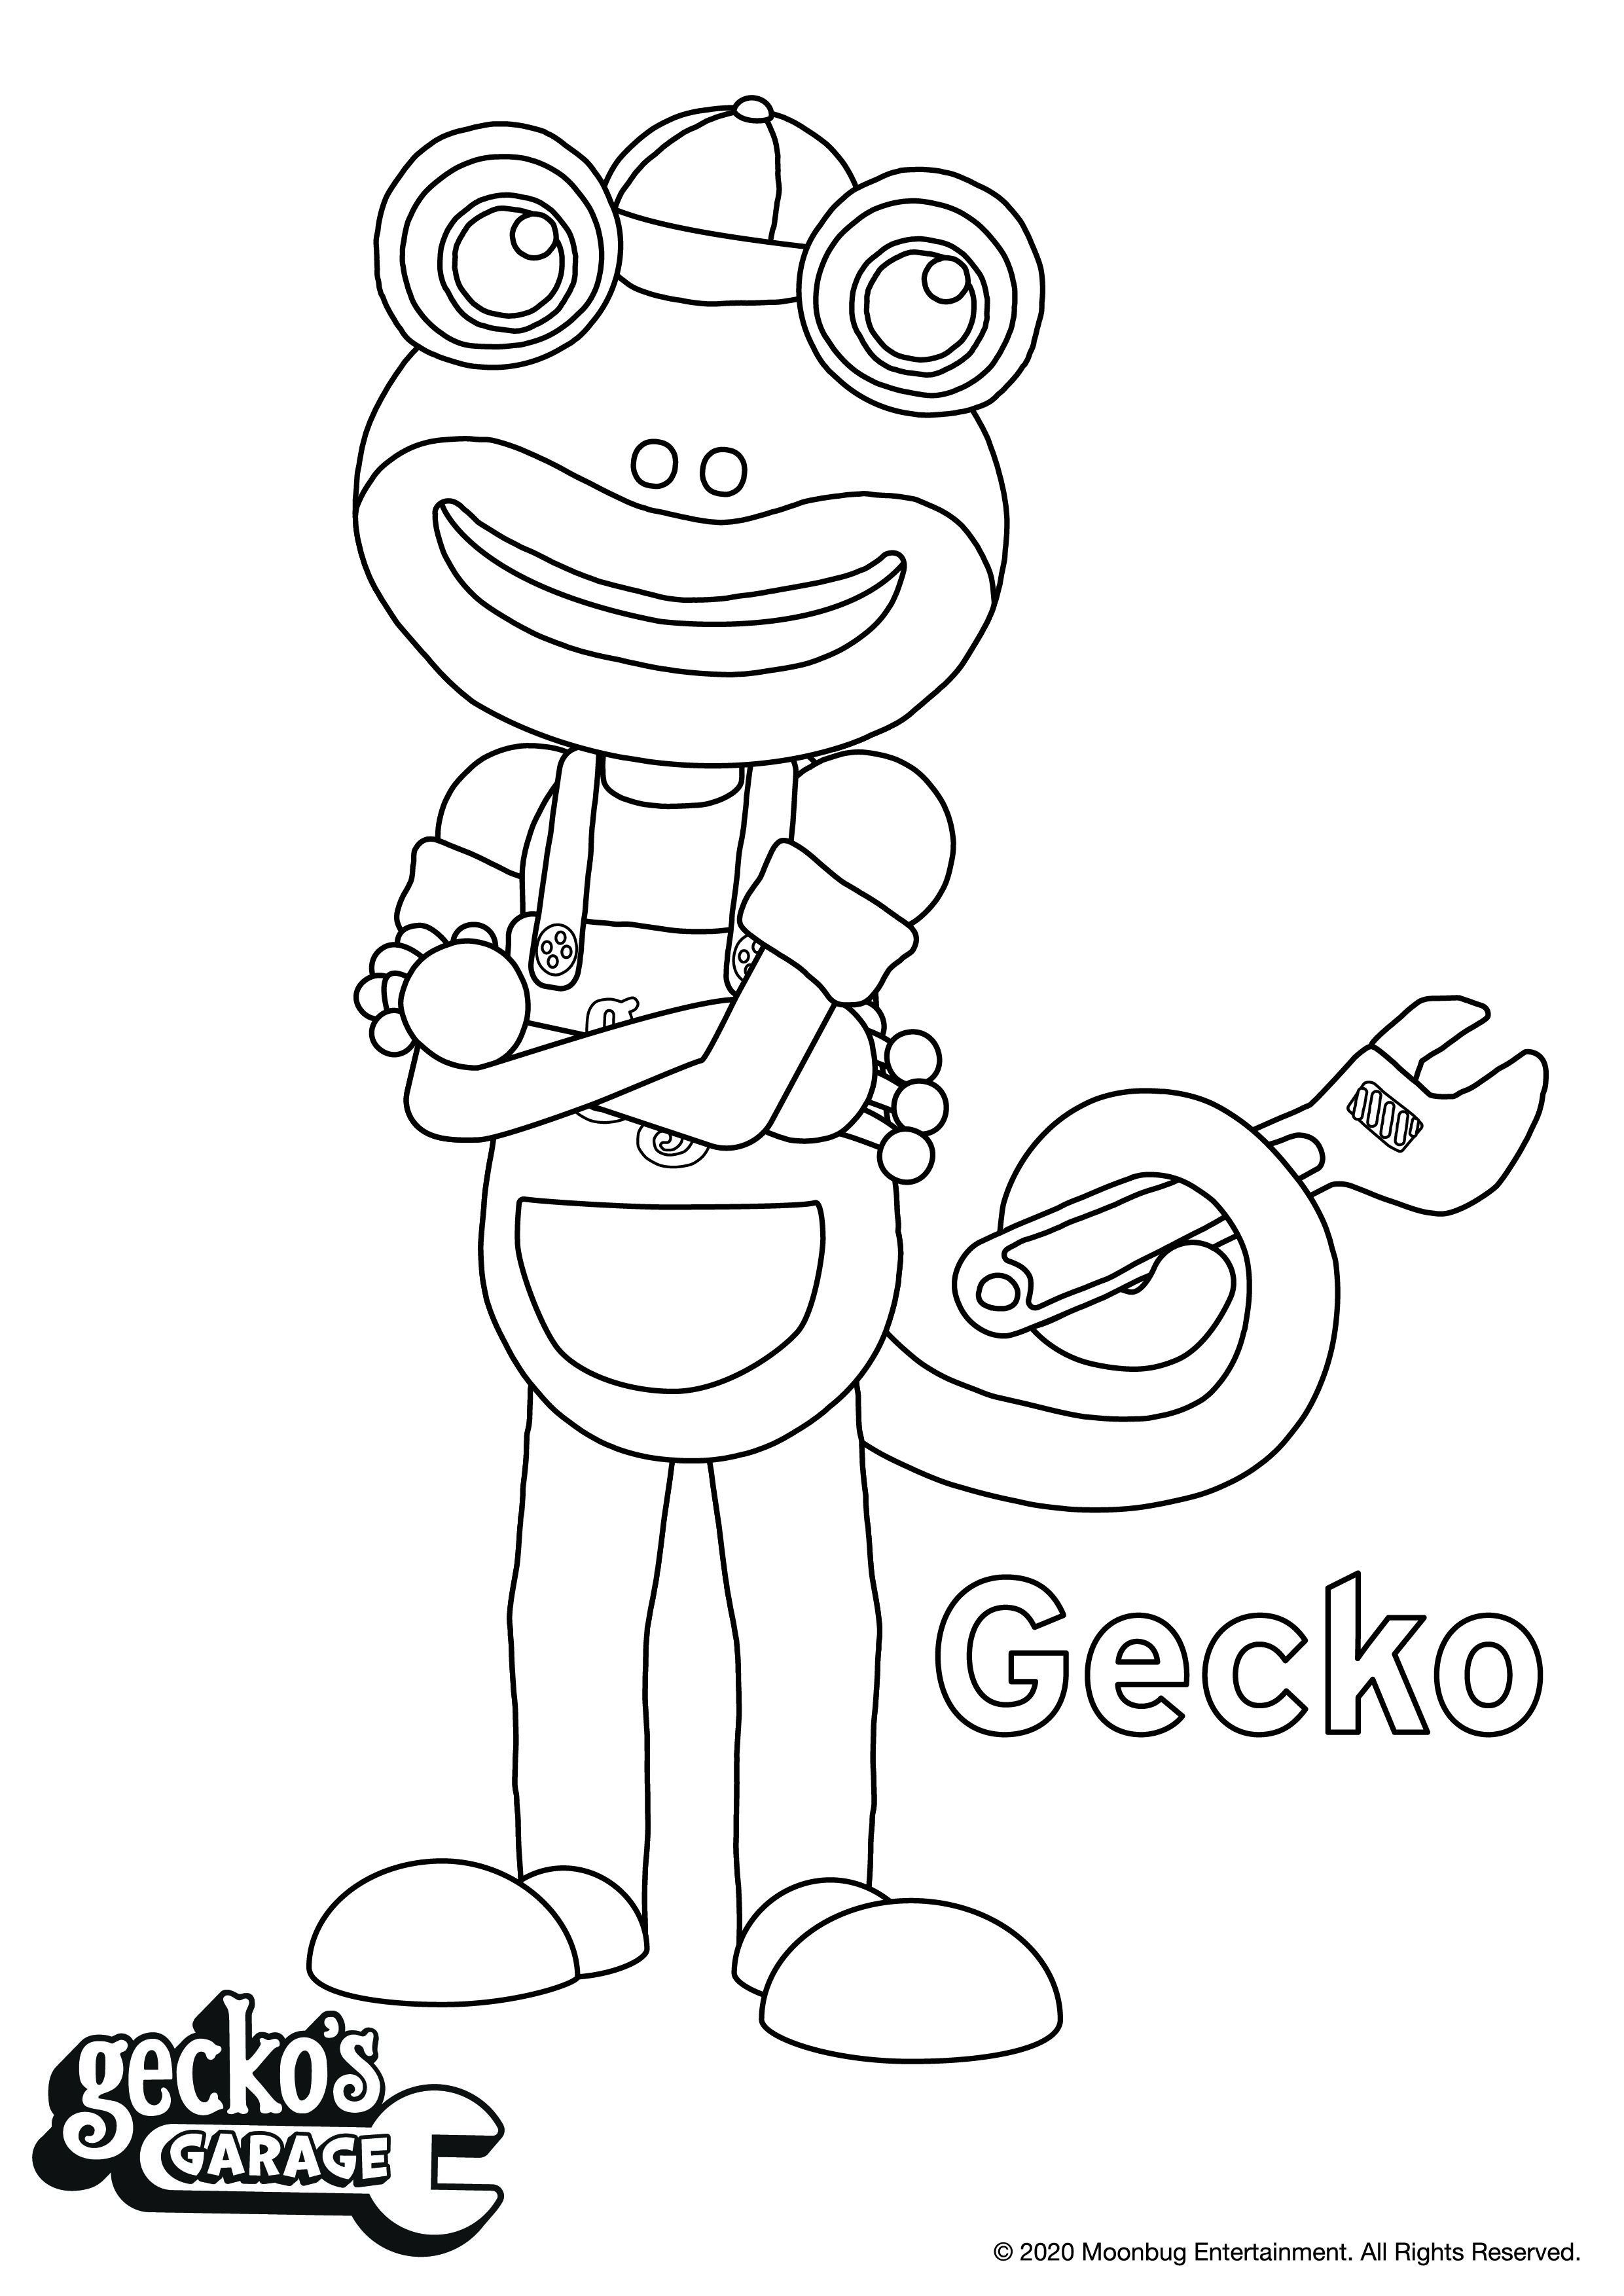 Gecko's Garage Activity/Coloring Sheet